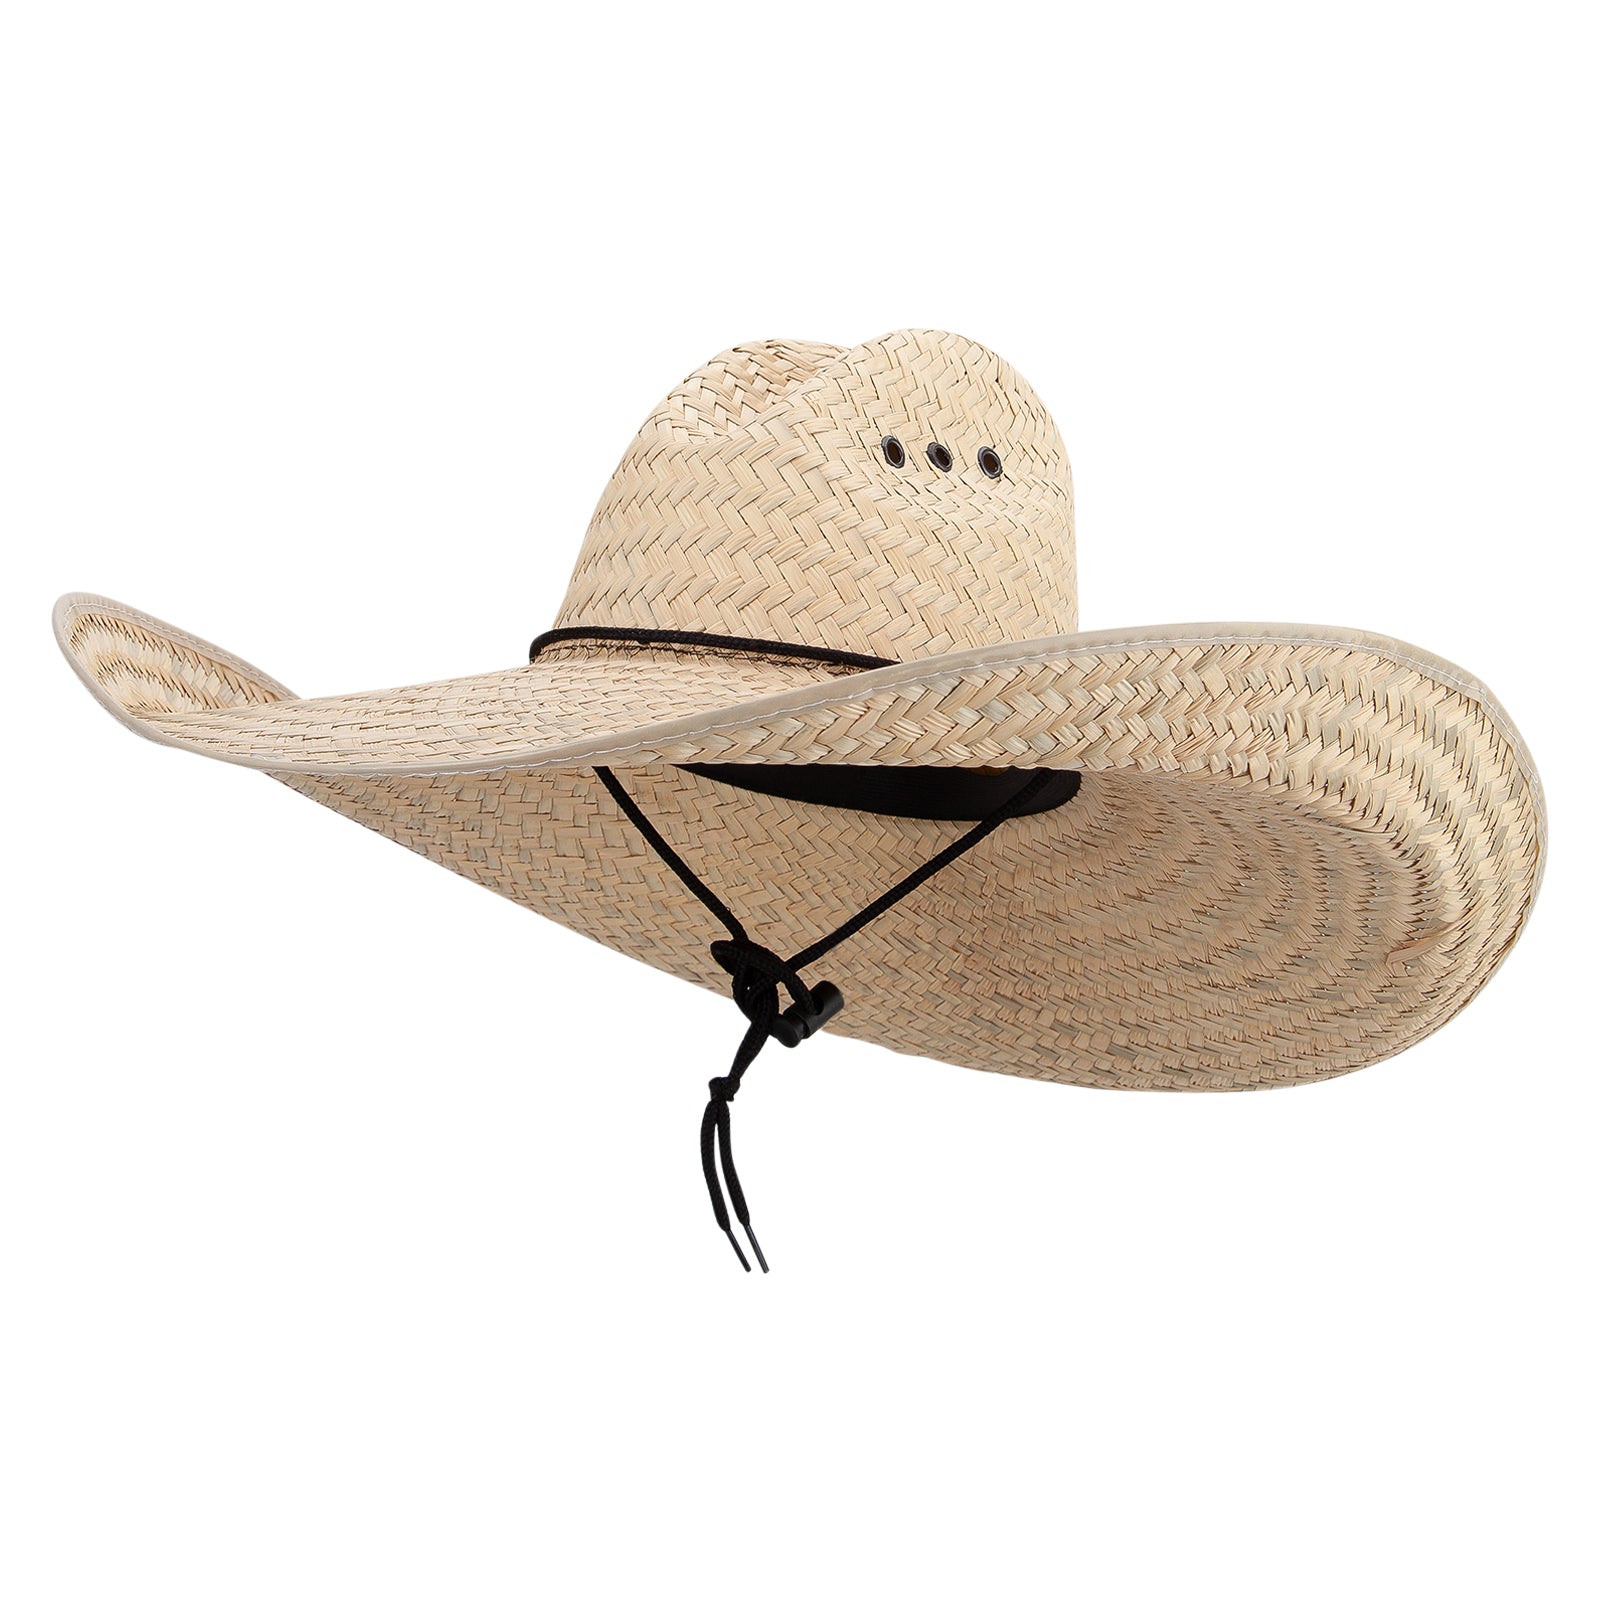 Men's Palm Braid Gambler Hat, Dk Natural / M